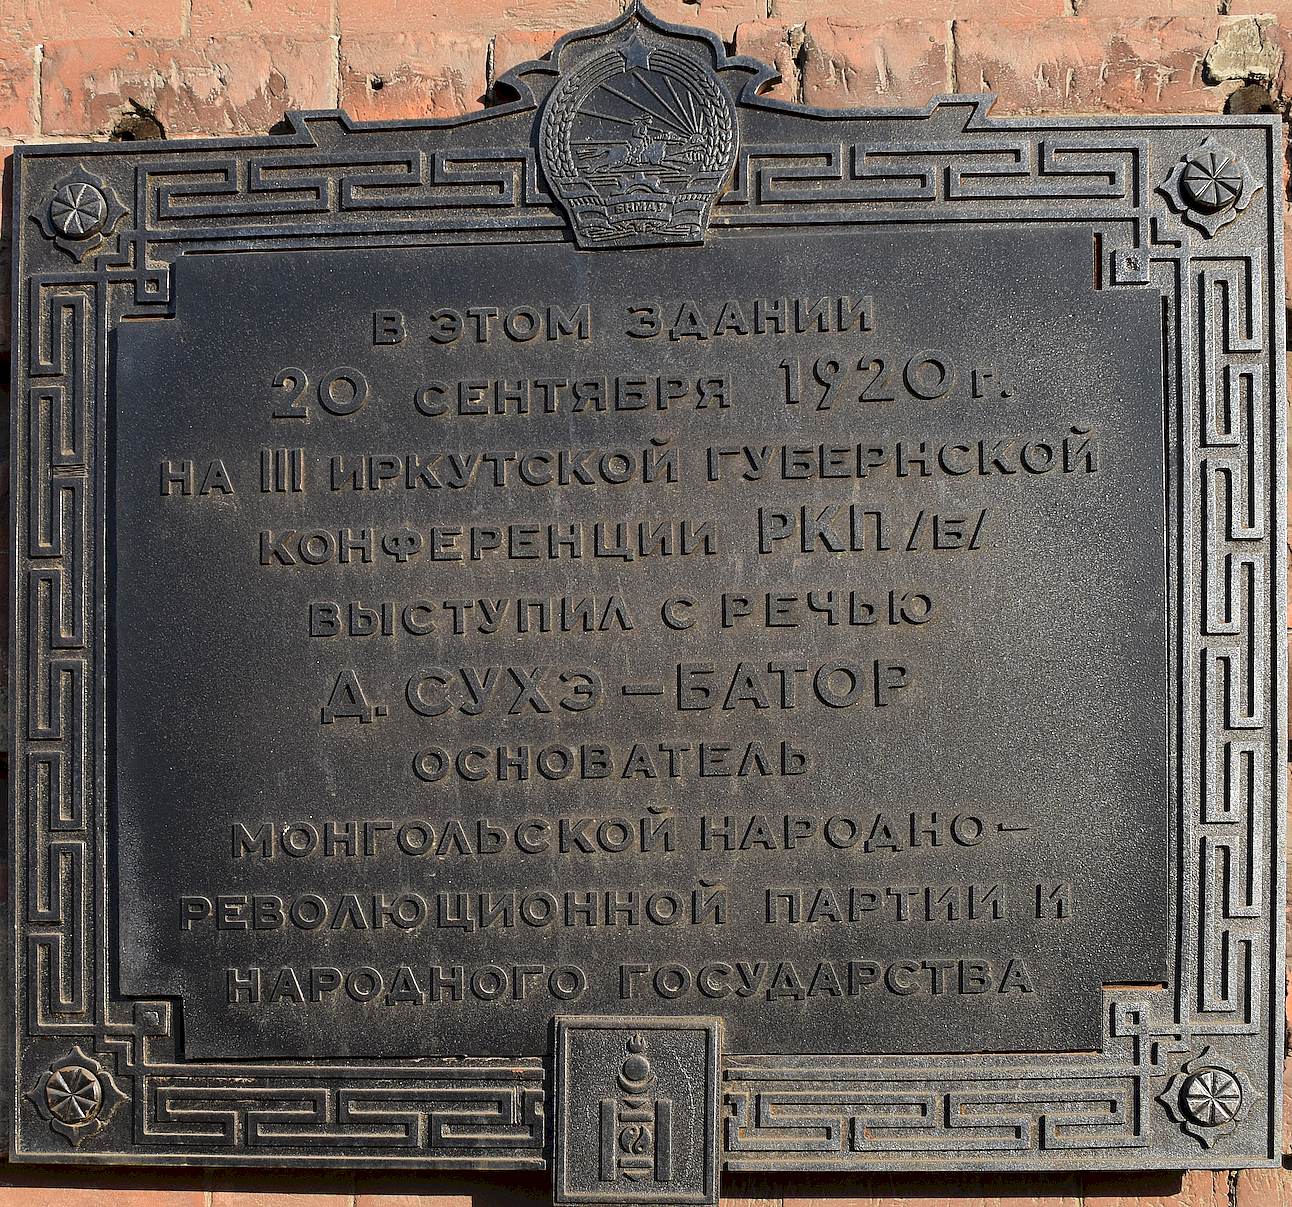 Irkutsk, . Irkutsk — Commemorative plaques